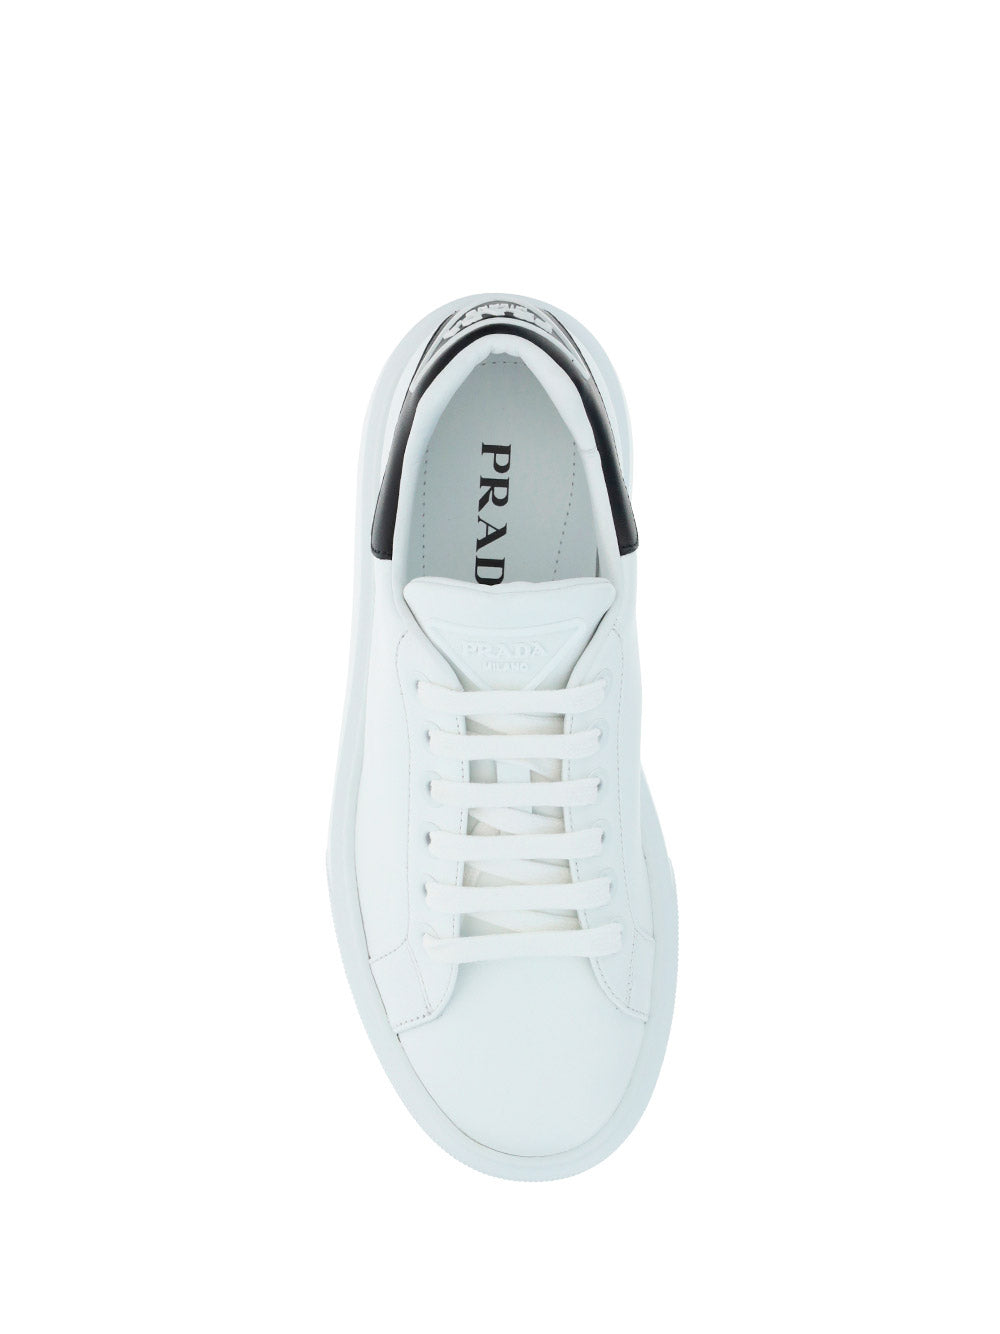 Prada Macro Leather Sneakers - White/Black